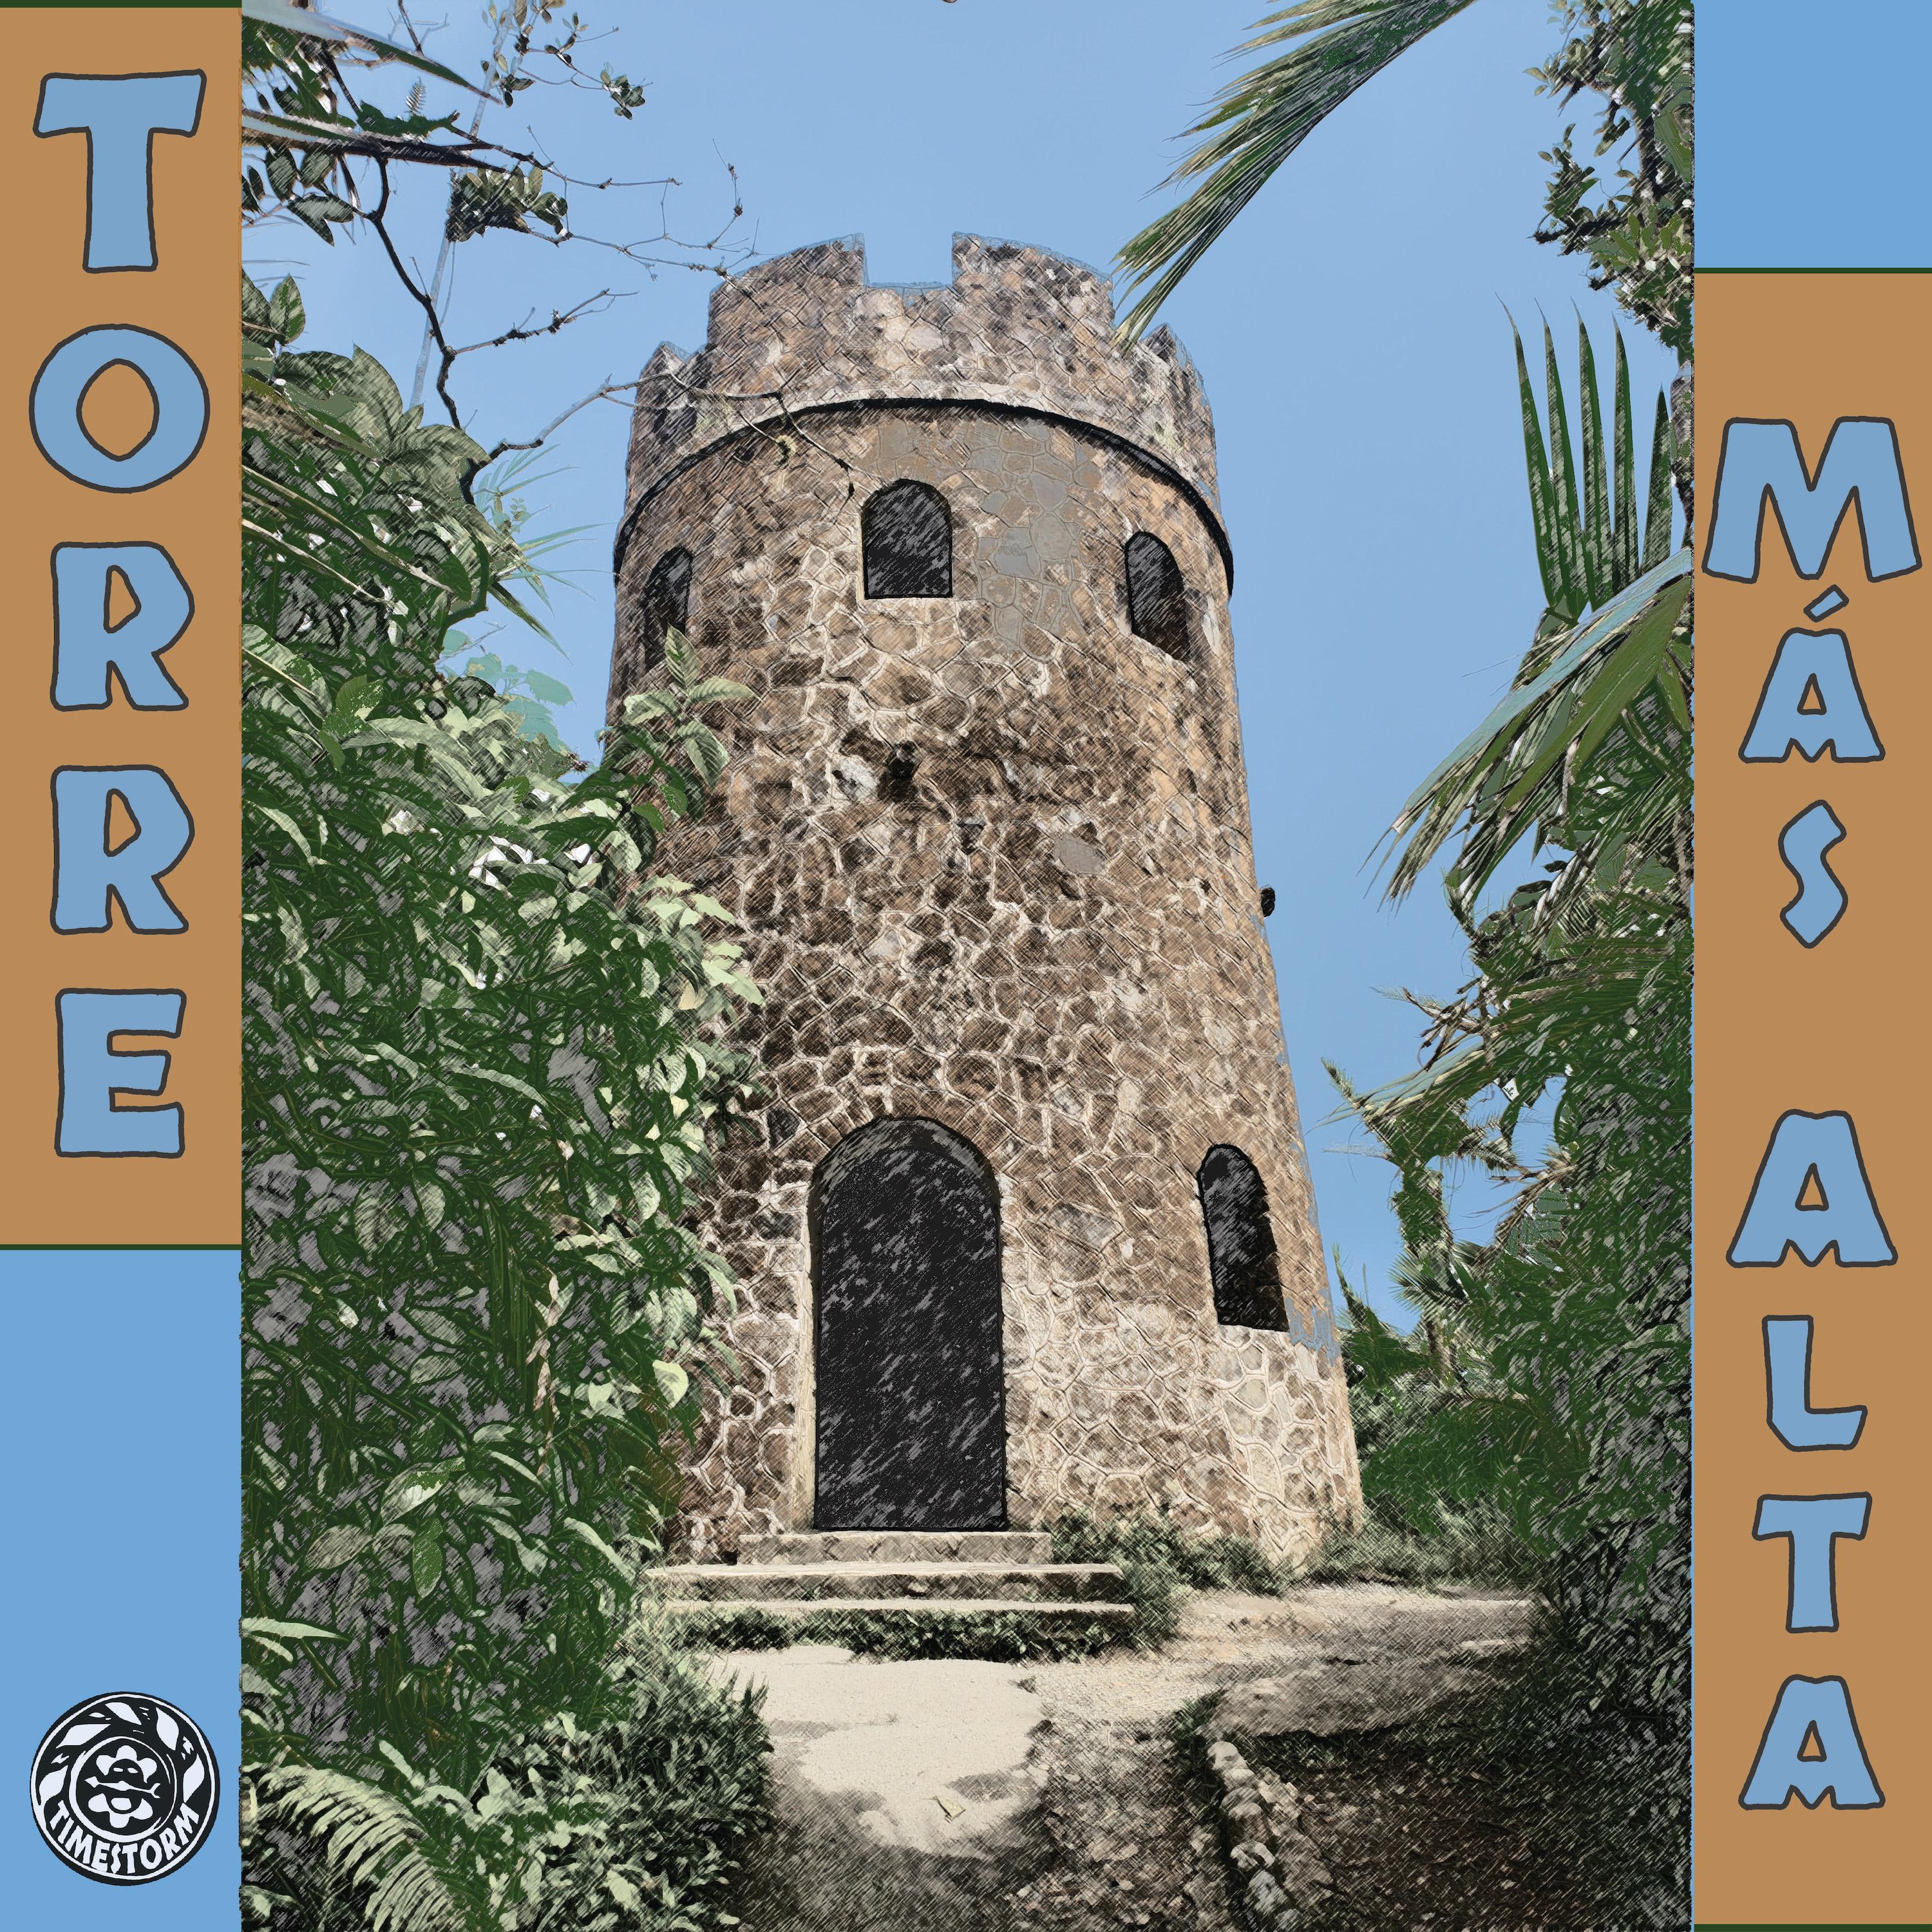 Thumbnail for "Episode 26: Torre Más Alta".